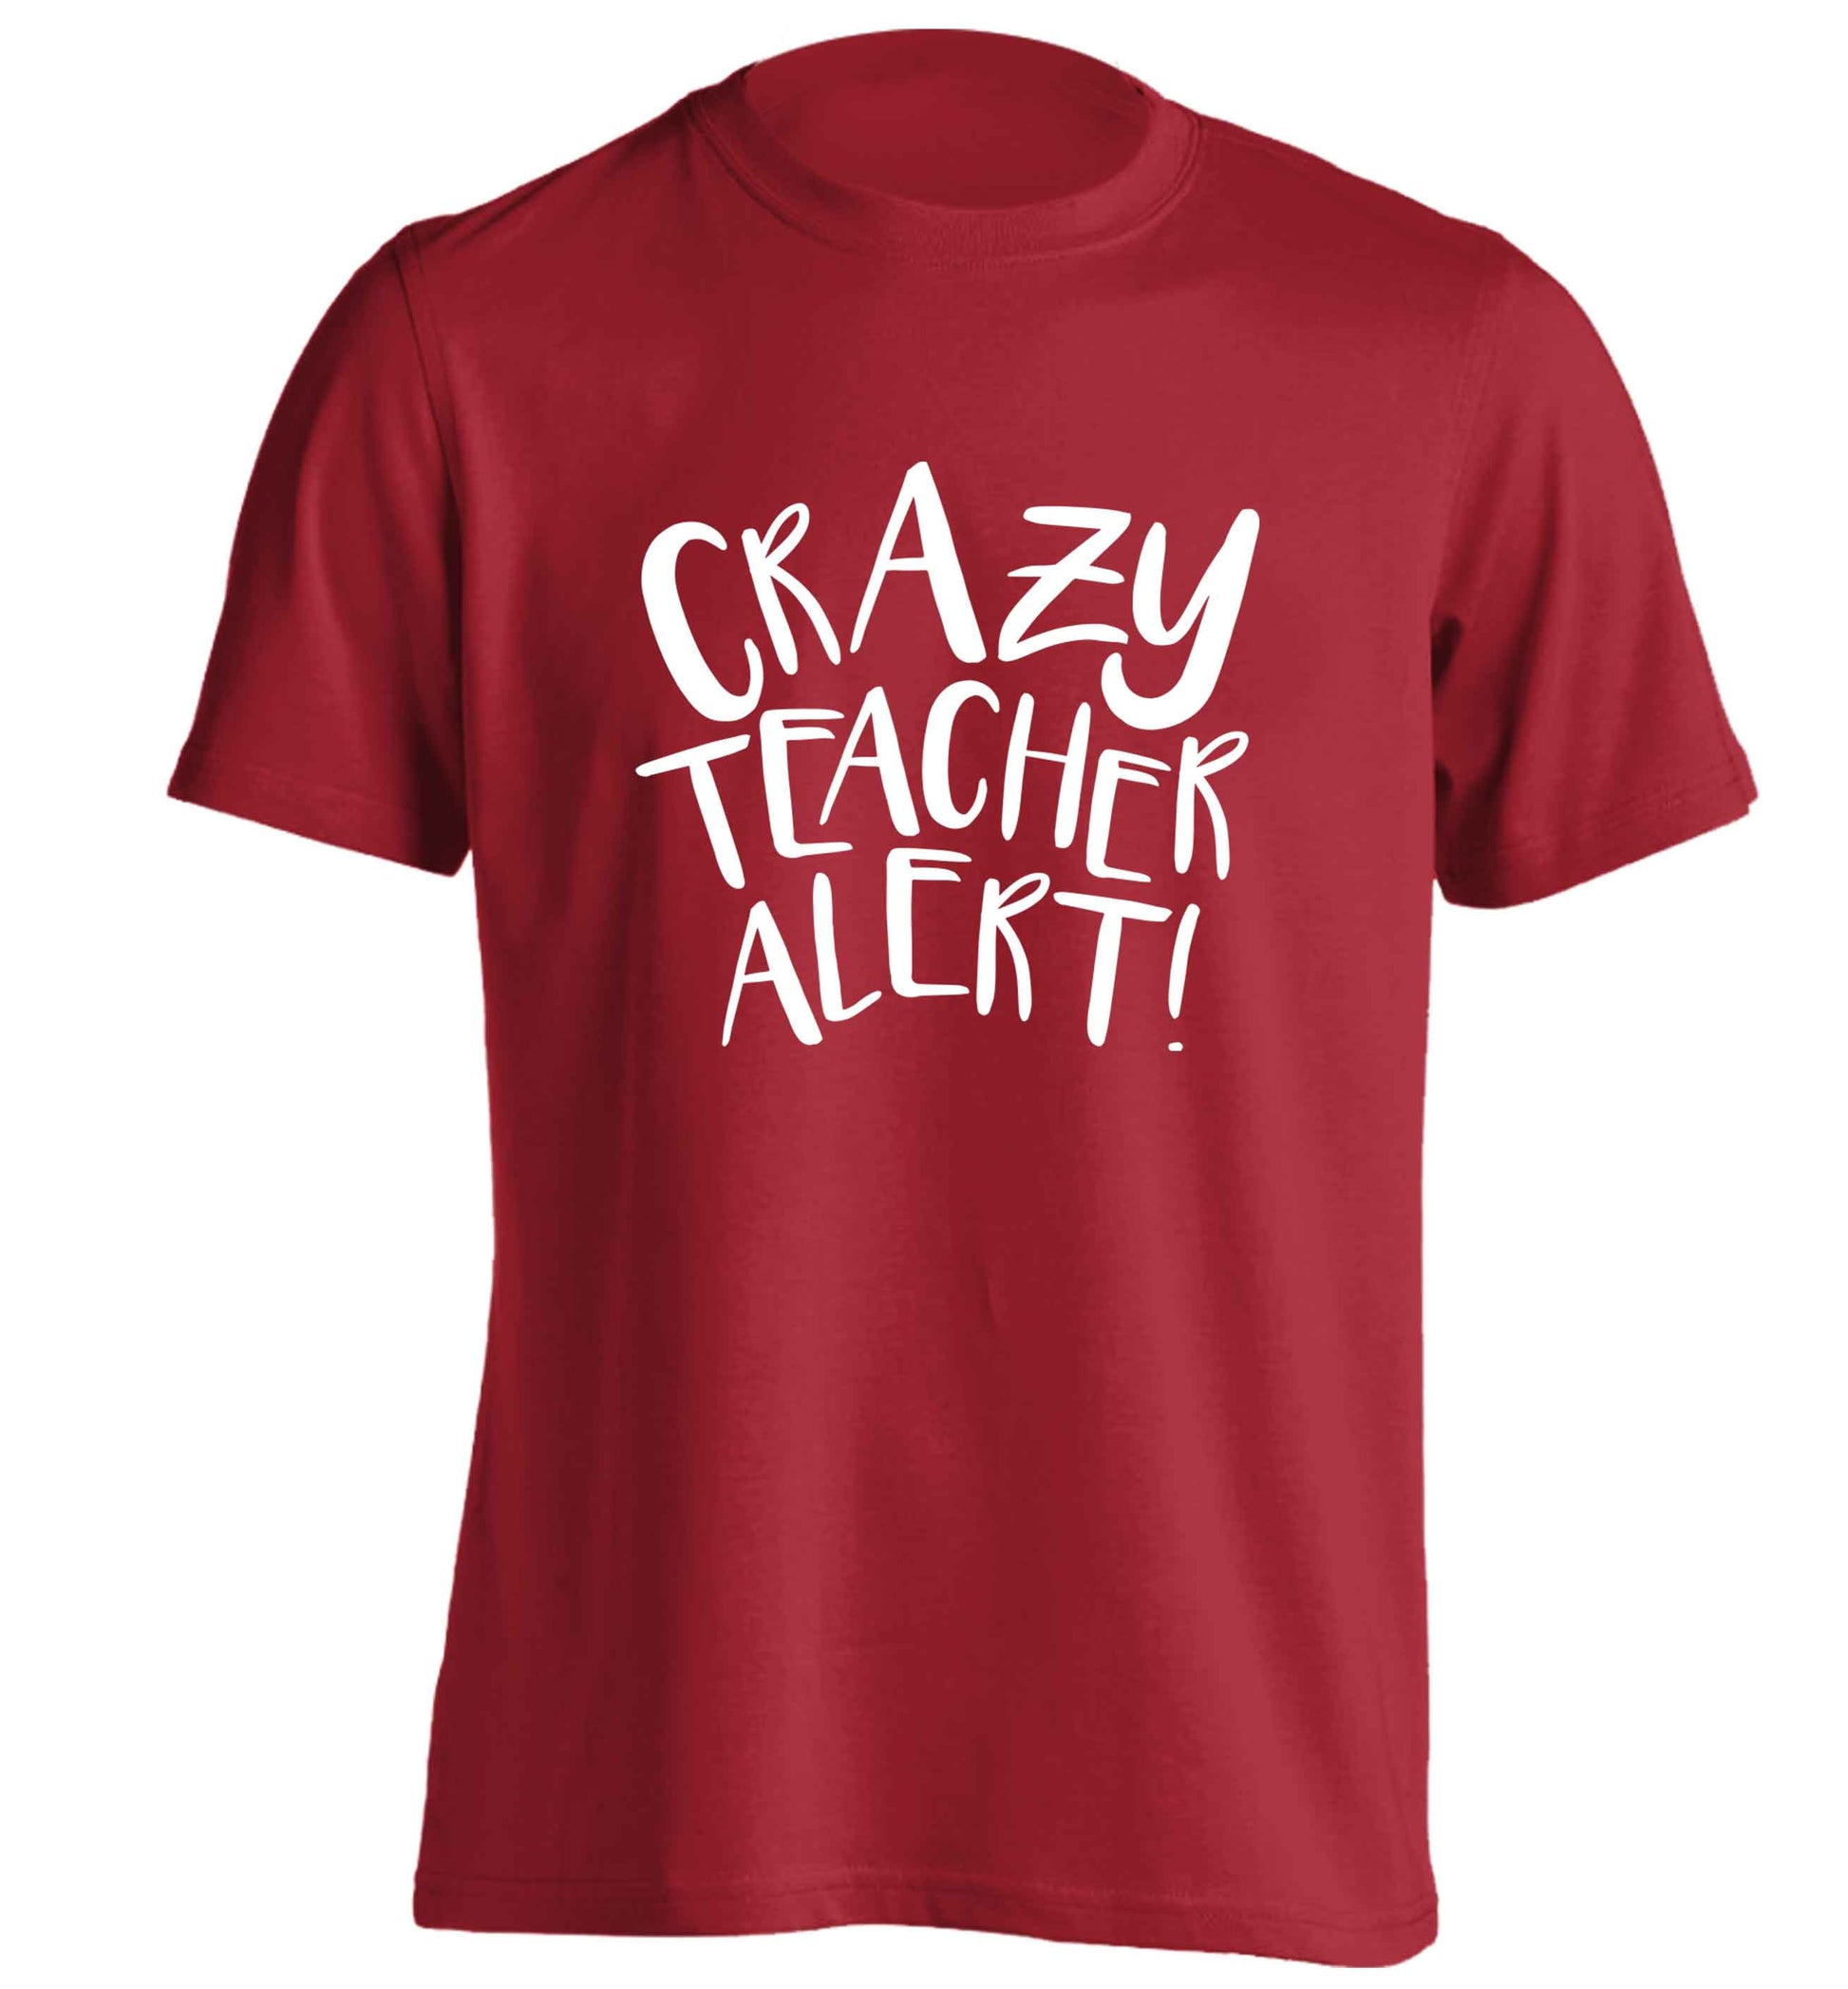 Crazy teacher alert adults unisex red Tshirt 2XL